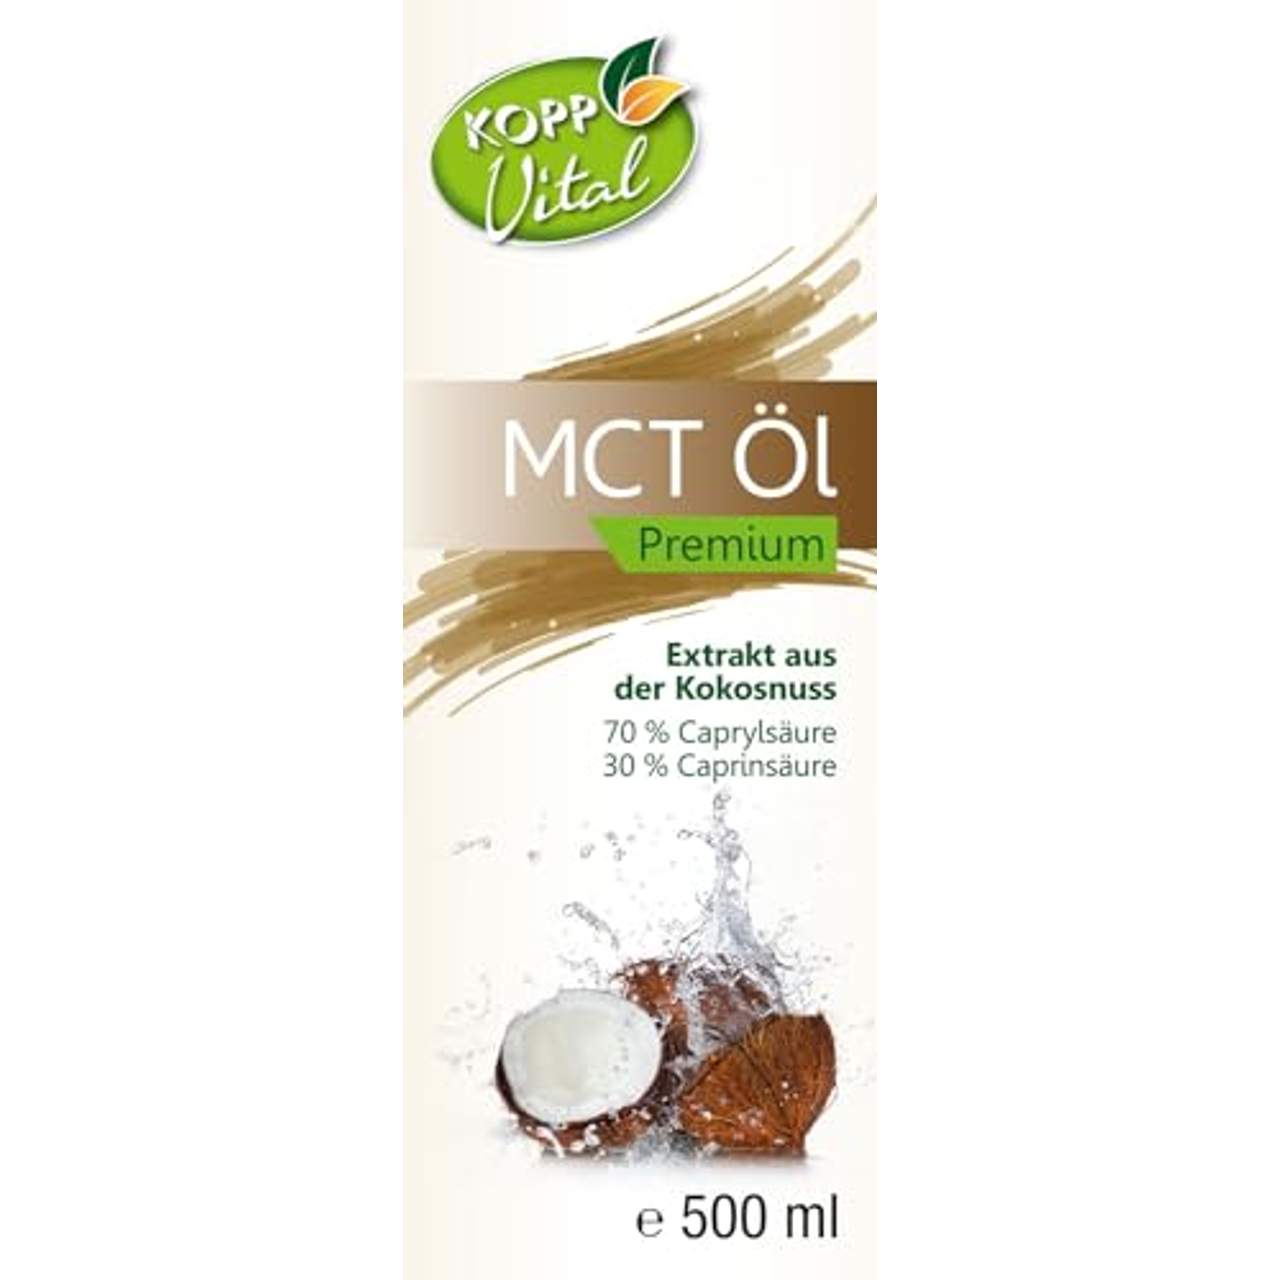 Kopp Vital MCT-Öl 100 Prozent Premium-Qualität